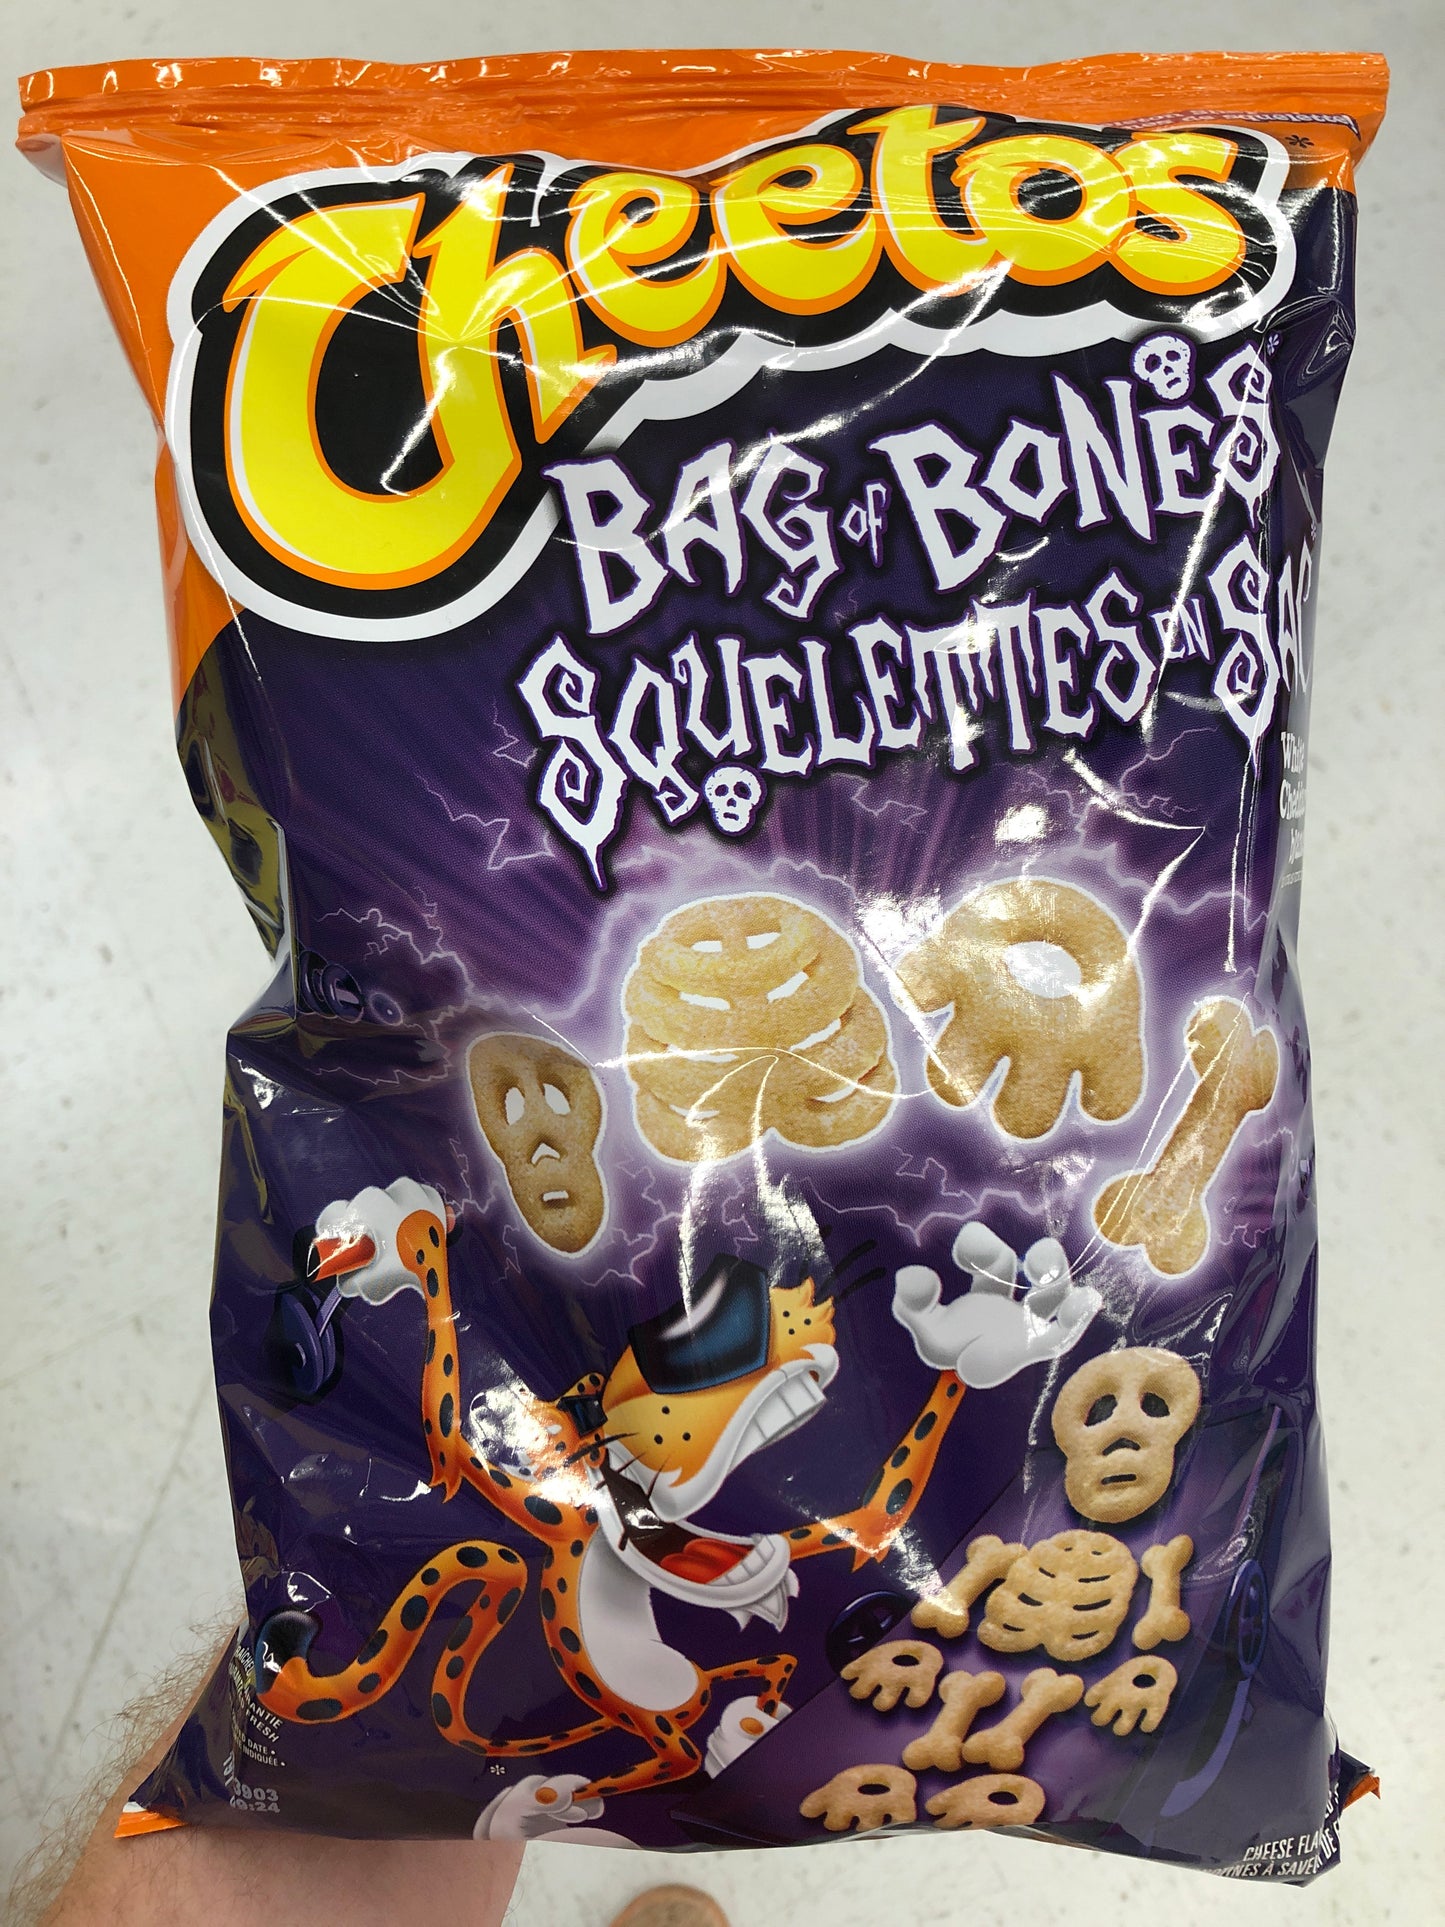 Cheetos Bag of Bones White Cheddar